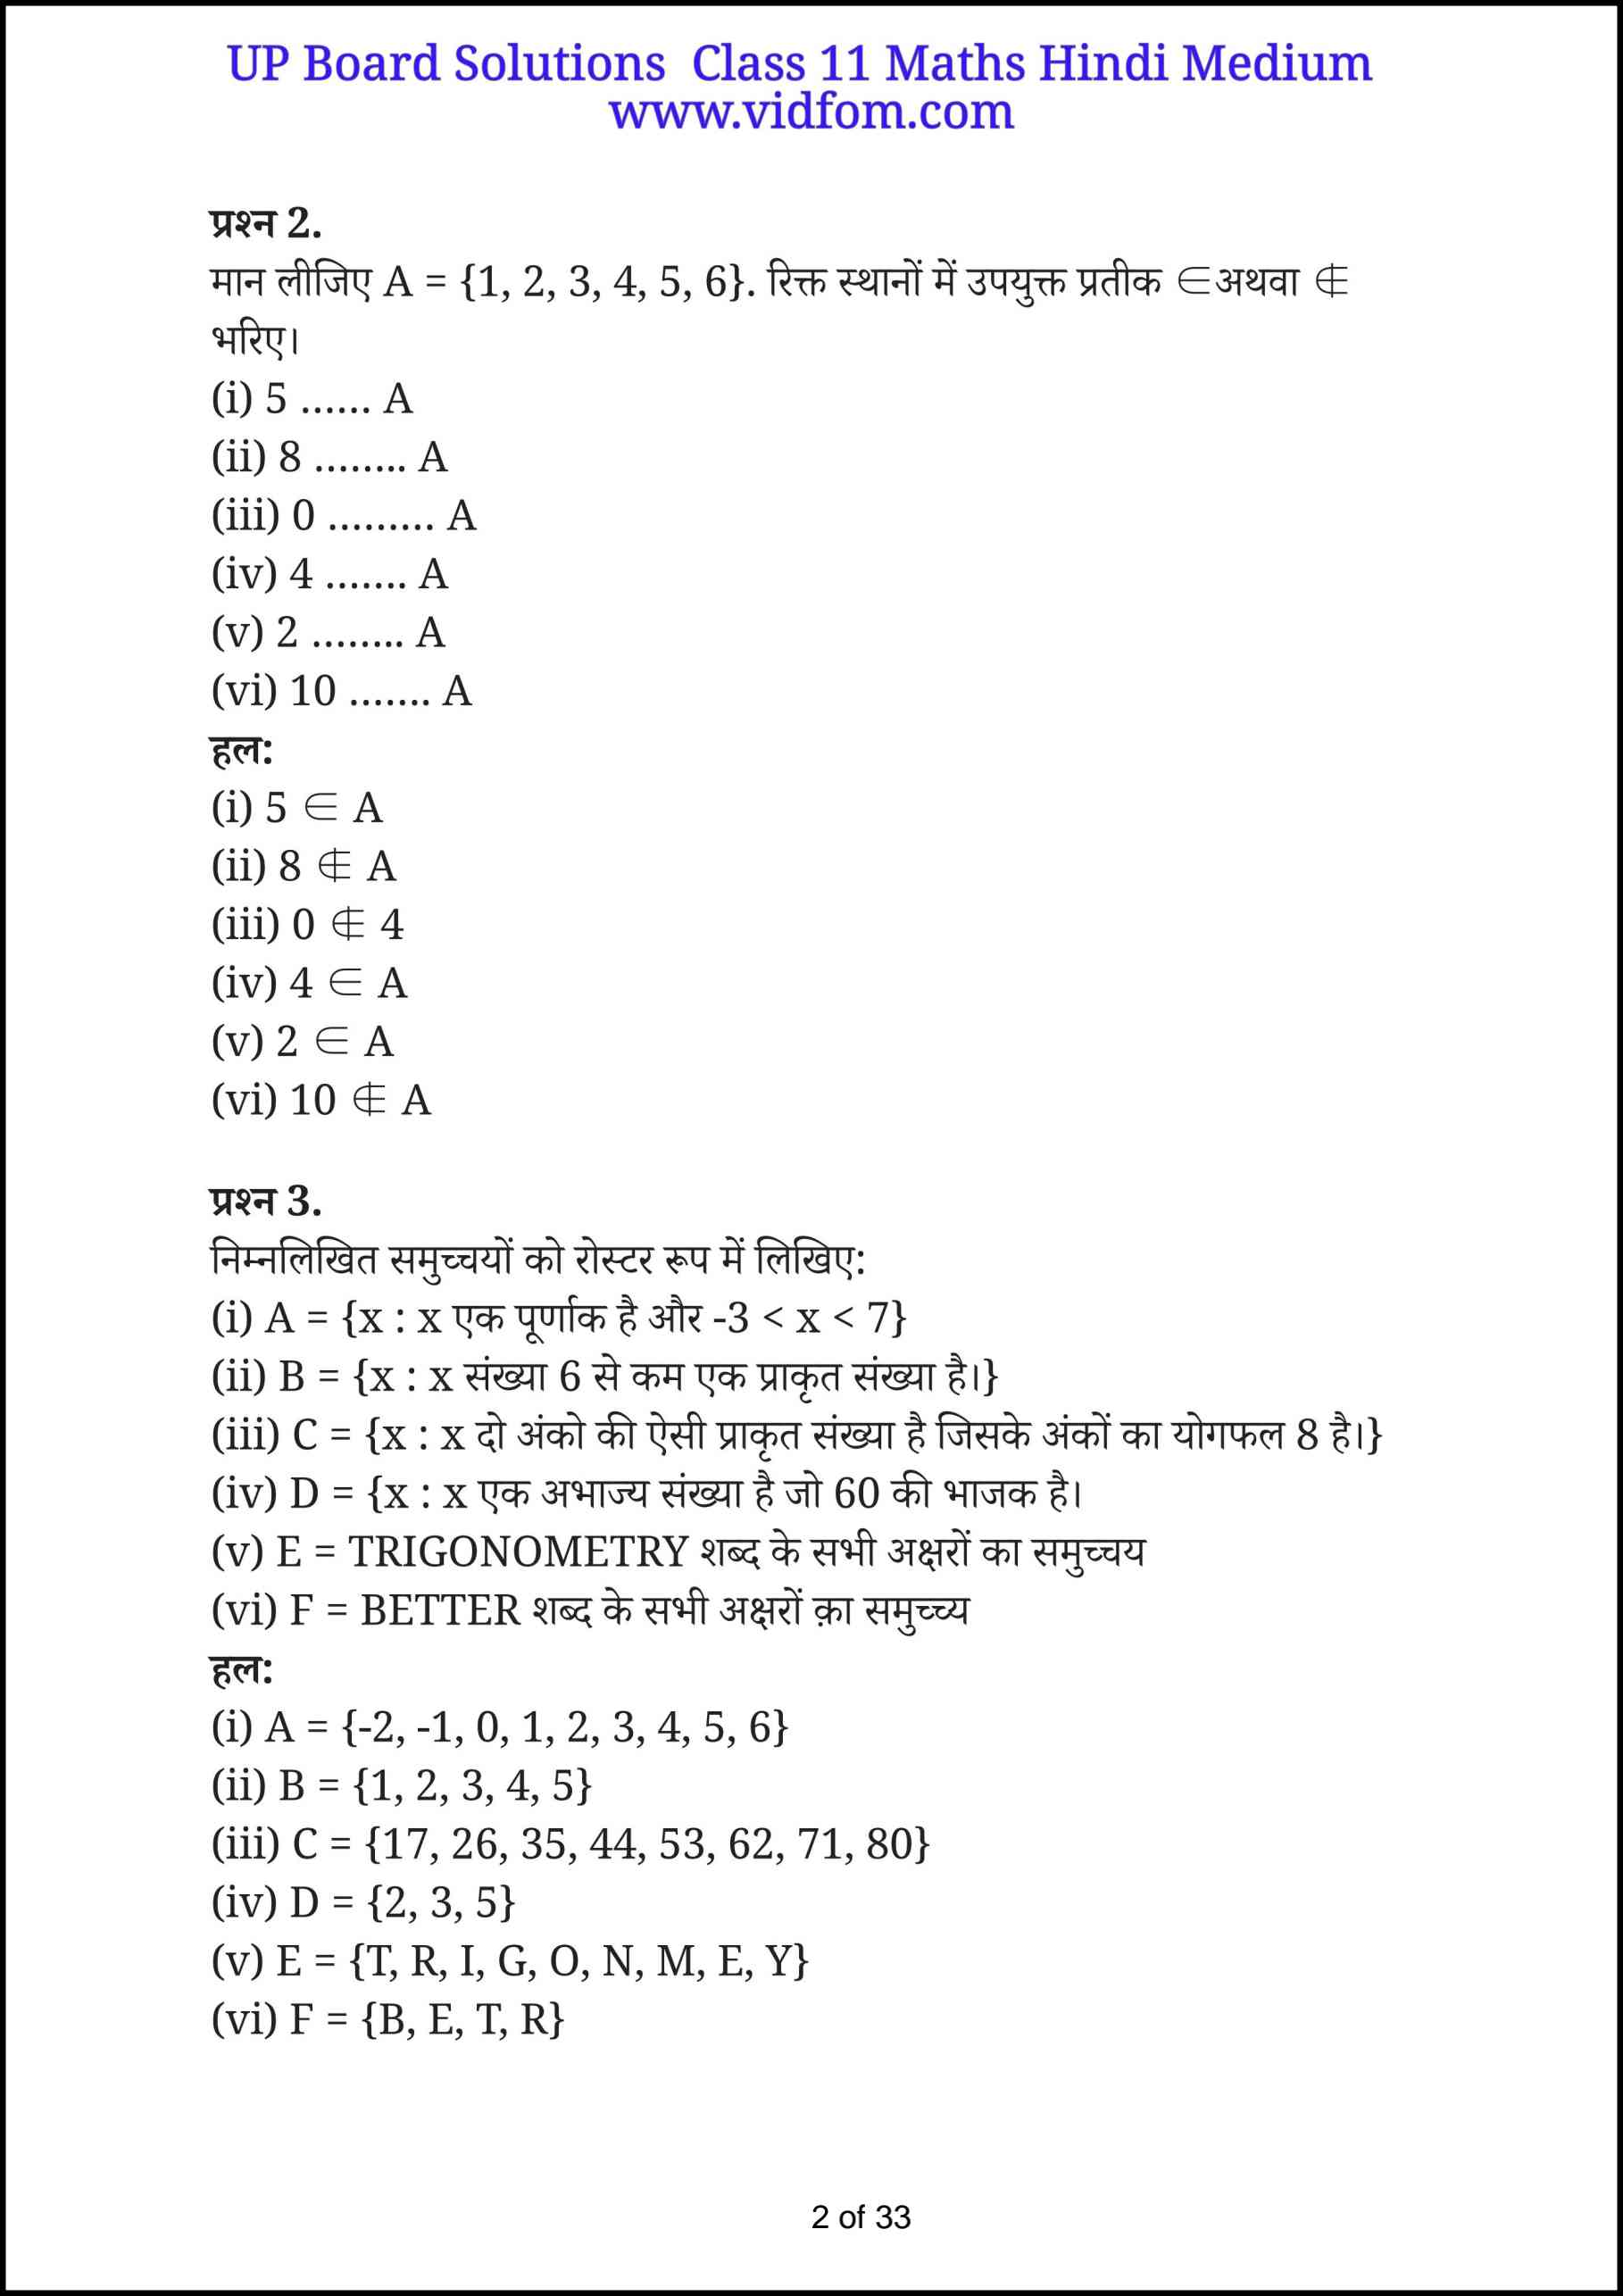 कक्षा 11 गणित के नोट्स  हिंदी में एनसीईआरटी समाधान,     class 11 Maths Chapter 1,   class 11 Maths Chapter 1 ncert solutions in Hindi,   class 11 Maths Chapter 1 notes in hindi,   class 11 Maths Chapter 1 question answer,   class 11 Maths Chapter 1 class 11 Maths Chapter 1 in  hindi,    class 11 Maths Chapter 1 important questions in  hindi,   class 11 Maths Chapter 1 notes in hindi,    class 11 Maths Chapter 1 test,   class 11 Maths Chapter 1 pdf,   class 11 Maths Chapter 1 notes pdf,   class 11 Maths Chapter 1 exercise solutions,   class 11 Maths Chapter 1 notes study rankers,   class 11 Maths Chapter 1 notes,    class 11 Maths Chapter 1  class 11  notes pdf,   class 11 Maths Chapter 1 class 11  notes  ncert,   class 11 Maths Chapter 1 class 11 pdf,   class 11 Maths Chapter 1  book,   class 11 Maths Chapter 1 quiz class 11,   11  th class 11 Maths Chapter 1  book up board,   up board 11  th class 11 Maths Chapter 1 notes,  class 11 Maths,   class 11 Maths ncert solutions in Hindi,   class 11 Maths notes in hindi,   class 11 Maths question answer,   class 11 Maths notes,  class 11 Maths class 11 Maths Chapter 1 in  hindi,    class 11 Maths important questions in  hindi,   class 11 Maths notes in hindi,    class 11 Maths test,  class 11 Maths class 11 Maths Chapter 1 pdf,   class 11 Maths notes pdf,   class 11 Maths exercise solutions,   class 11 Maths,  class 11 Maths notes study rankers,   class 11 Maths notes,  class 11 Maths notes,   class 11 Maths  class 11  notes pdf,   class 11 Maths class 11  notes  ncert,   class 11 Maths class 11 pdf,   class 11 Maths  book,  class 11 Maths quiz class 11  ,  11  th class 11 Maths    book up board,    up board 11  th class 11 Maths notes,     कक्षा 11 समुच्चय,  कक्षा 11 समुच्चय  के नोट्स हिंदी में,  कक्षा 11 समुच्चय प्रश्न उत्तर,  कक्षा 11 समुच्चय  के नोट्स,  11 कक्षा समुच्चय  हिंदी में, कक्षा 11 समुच्चय  हिंदी में,  कक्षा 11 समुच्चय  महत्वपूर्ण प्रश्न हिंदी में, कक्षा 11 गणित के नोट्स  हिंदी में, समुच्चय हिंदी में  कक्षा 11 नोट्स pdf,    समुच्चय हिंदी में  कक्षा 11 नोट्स 2021 ncert,   समुच्चय हिंदी  कक्षा 11 pdf,   समुच्चय हिंदी में  पुस्तक,   समुच्चय हिंदी में की बुक,   समुच्चय हिंदी में  प्रश्नोत्तरी class 11 ,  11  वीं समुच्चय  पुस्तक up board,   बिहार बोर्ड 11  पुस्तक वीं समुच्चय नोट्स,    समुच्चय  कक्षा 11 नोट्स 2021 ncert,   समुच्चय  कक्षा 11 pdf,   समुच्चय  पुस्तक,   समुच्चय की बुक,   समुच्चय प्रश्नोत्तरी class 11, कक्षा 11 गणित अध्याय 1 ,  कक्षा 11 गणित, कक्षा 11 गणित अध्याय 1  के नोट्स हिंदी में,  कक्षा 11 का हिंदी अध्याय 1 का प्रश्न उत्तर,  कक्षा 11 गणित अध्याय 1  के नोट्स,  11 कक्षा गणित  हिंदी में, कक्षा 11 गणित अध्याय 1  हिंदी में,  कक्षा 11 गणित अध्याय 1  महत्वपूर्ण प्रश्न हिंदी में, कक्षा 11   हिंदी के नोट्स  हिंदी में, गणित हिंदी में  कक्षा 11 नोट्स pdf,    गणित हिंदी में  कक्षा 11 नोट्स 2021 ncert,   गणित हिंदी  कक्षा 11 pdf,   गणित हिंदी में  पुस्तक,   गणित हिंदी में की बुक,   गणित हिंदी में  प्रश्नोत्तरी class 11 ,  बिहार बोर्ड 11  पुस्तक वीं हिंदी नोट्स,    गणित कक्षा 11 नोट्स 2021 ncert,   गणित  कक्षा 11 pdf,   गणित  पुस्तक,   गणित  प्रश्नोत्तरी class 11, कक्षा 11 गणित,  कक्षा 11 गणित  के नोट्स हिंदी में,  कक्षा 11 का हिंदी का प्रश्न उत्तर,  कक्षा 11 गणित  के नोट्स,  11 कक्षा हिंदी 2021  हिंदी में, कक्षा 11 गणित  हिंदी में,  कक्षा 11 गणित  महत्वपूर्ण प्रश्न हिंदी में, कक्षा 11 गणित  नोट्स  हिंदी में,